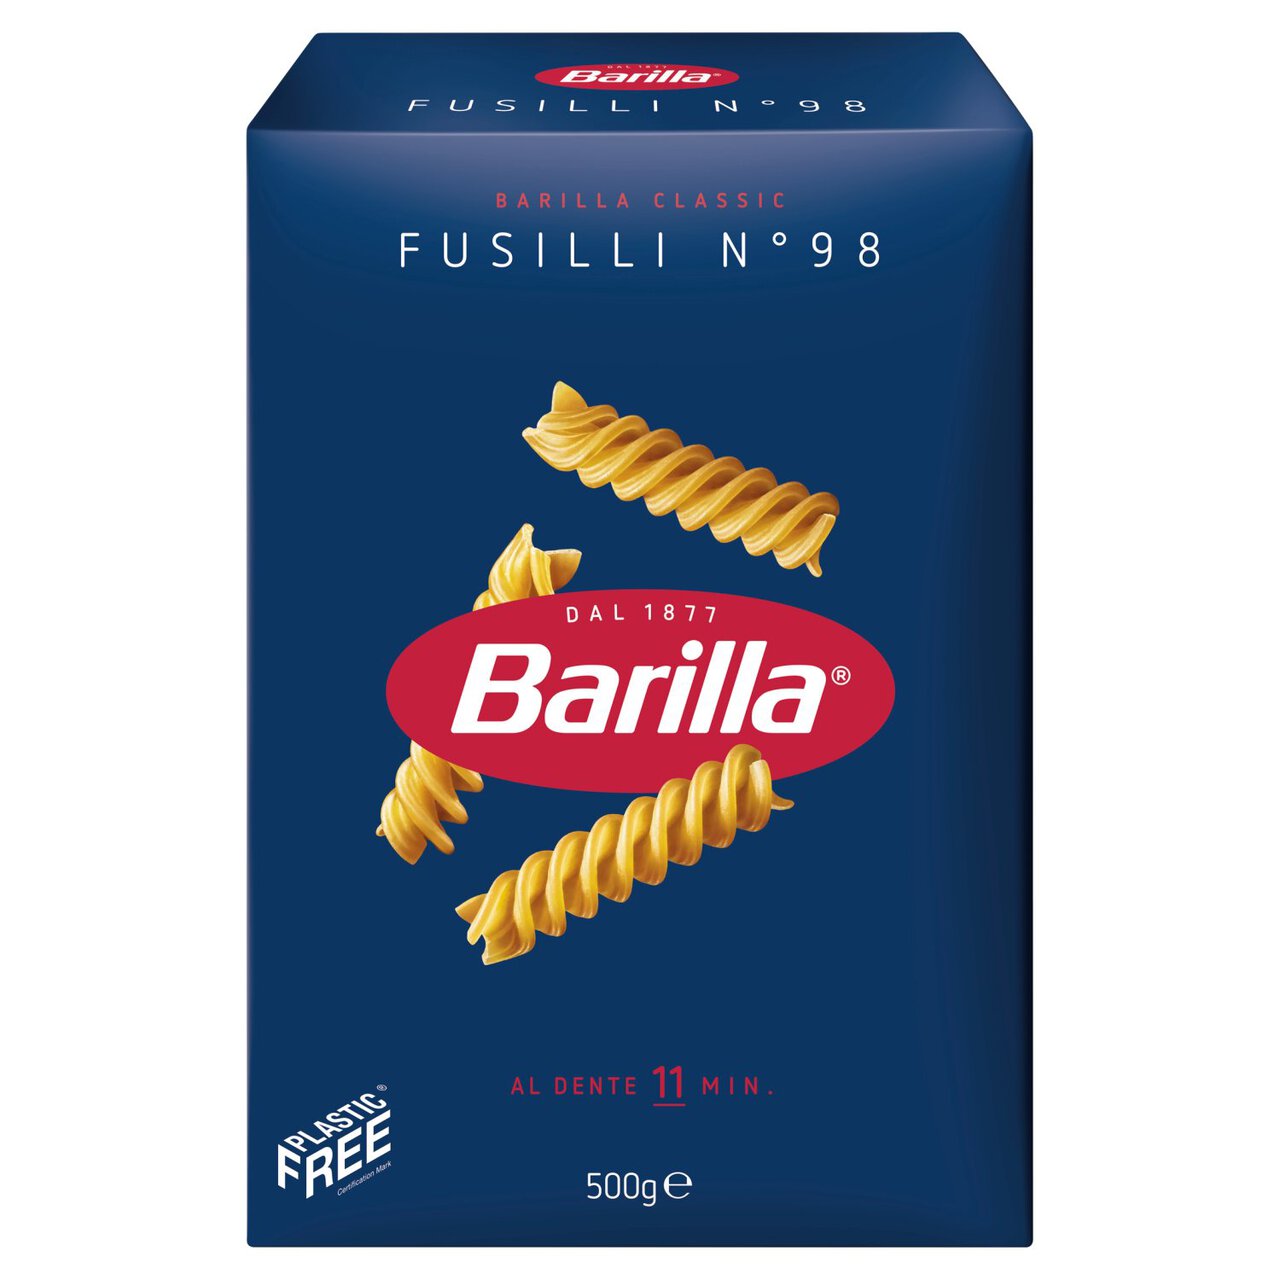 Barilla Pasta Fusilli 500g